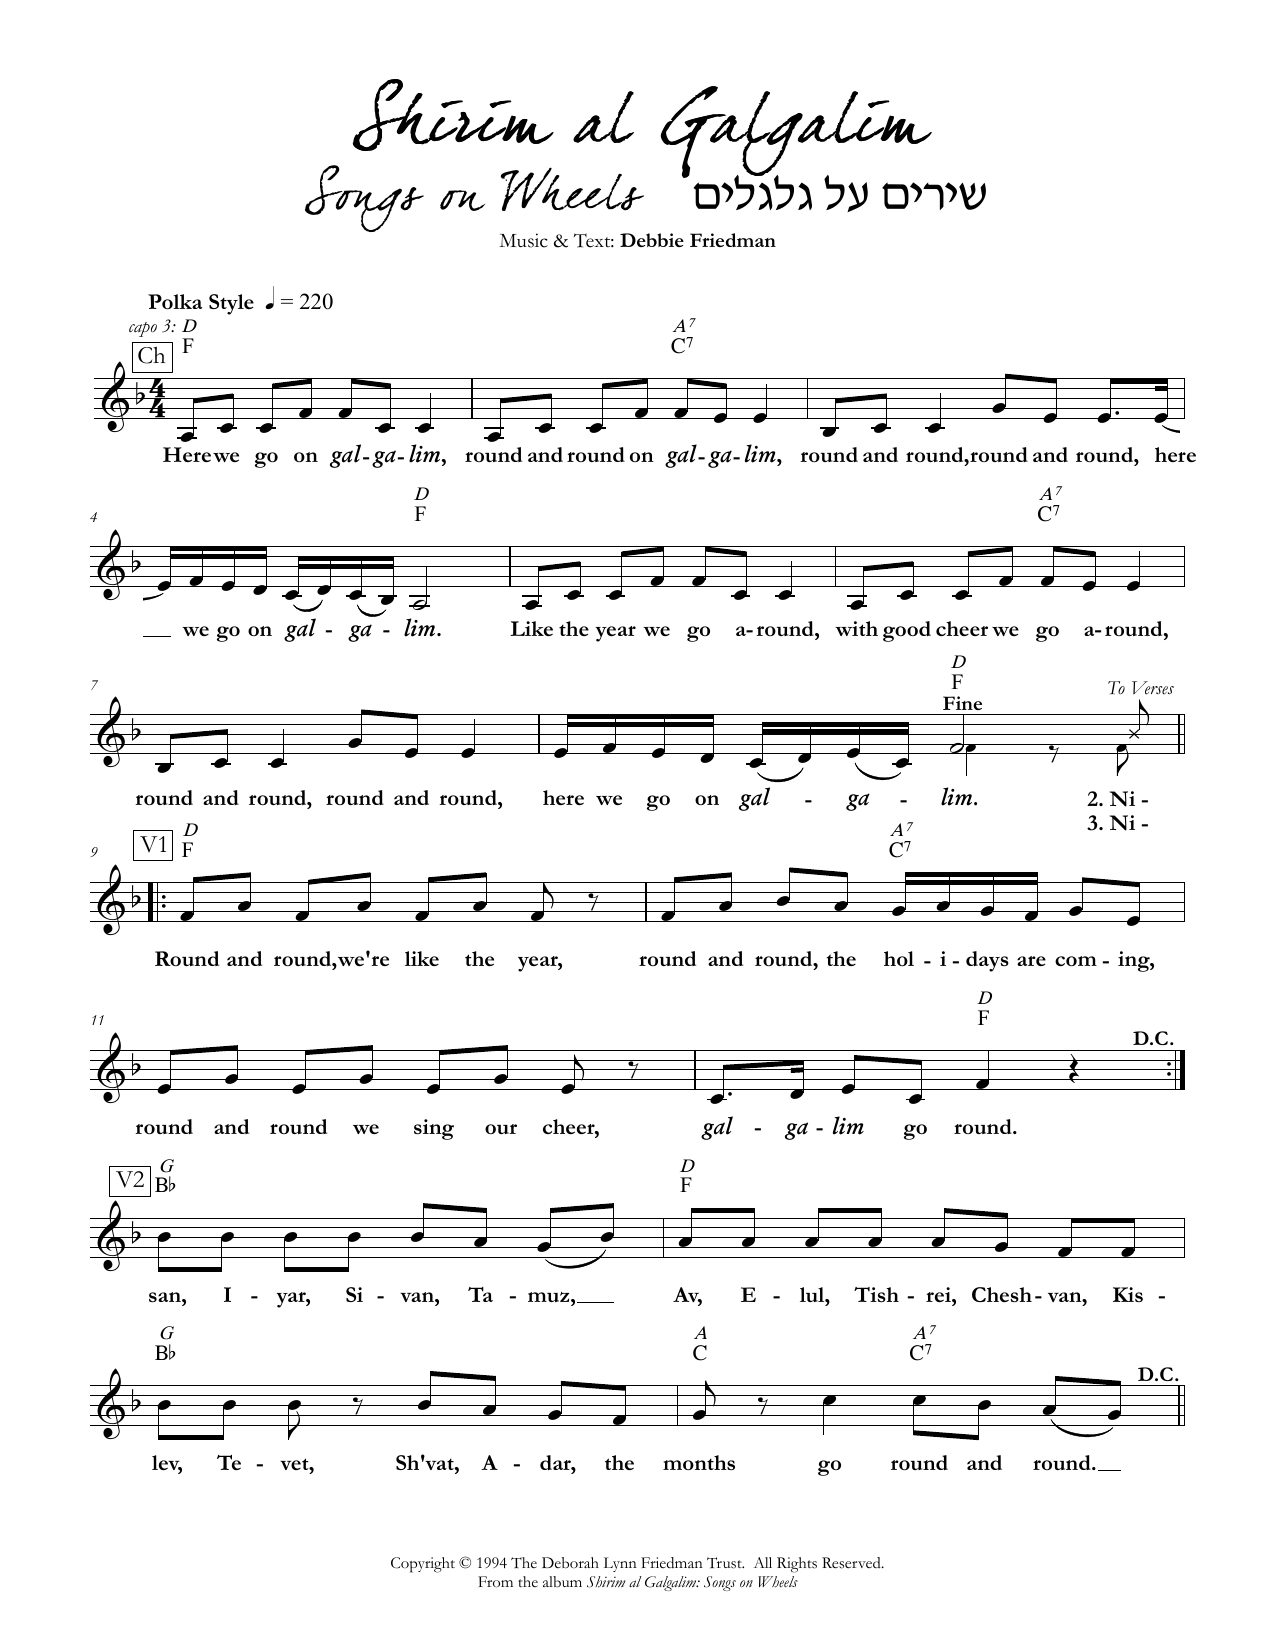 Debbie Friedman Shirim al Galgalim: Songs on Wheels Sheet Music Notes & Chords for Lead Sheet / Fake Book - Download or Print PDF